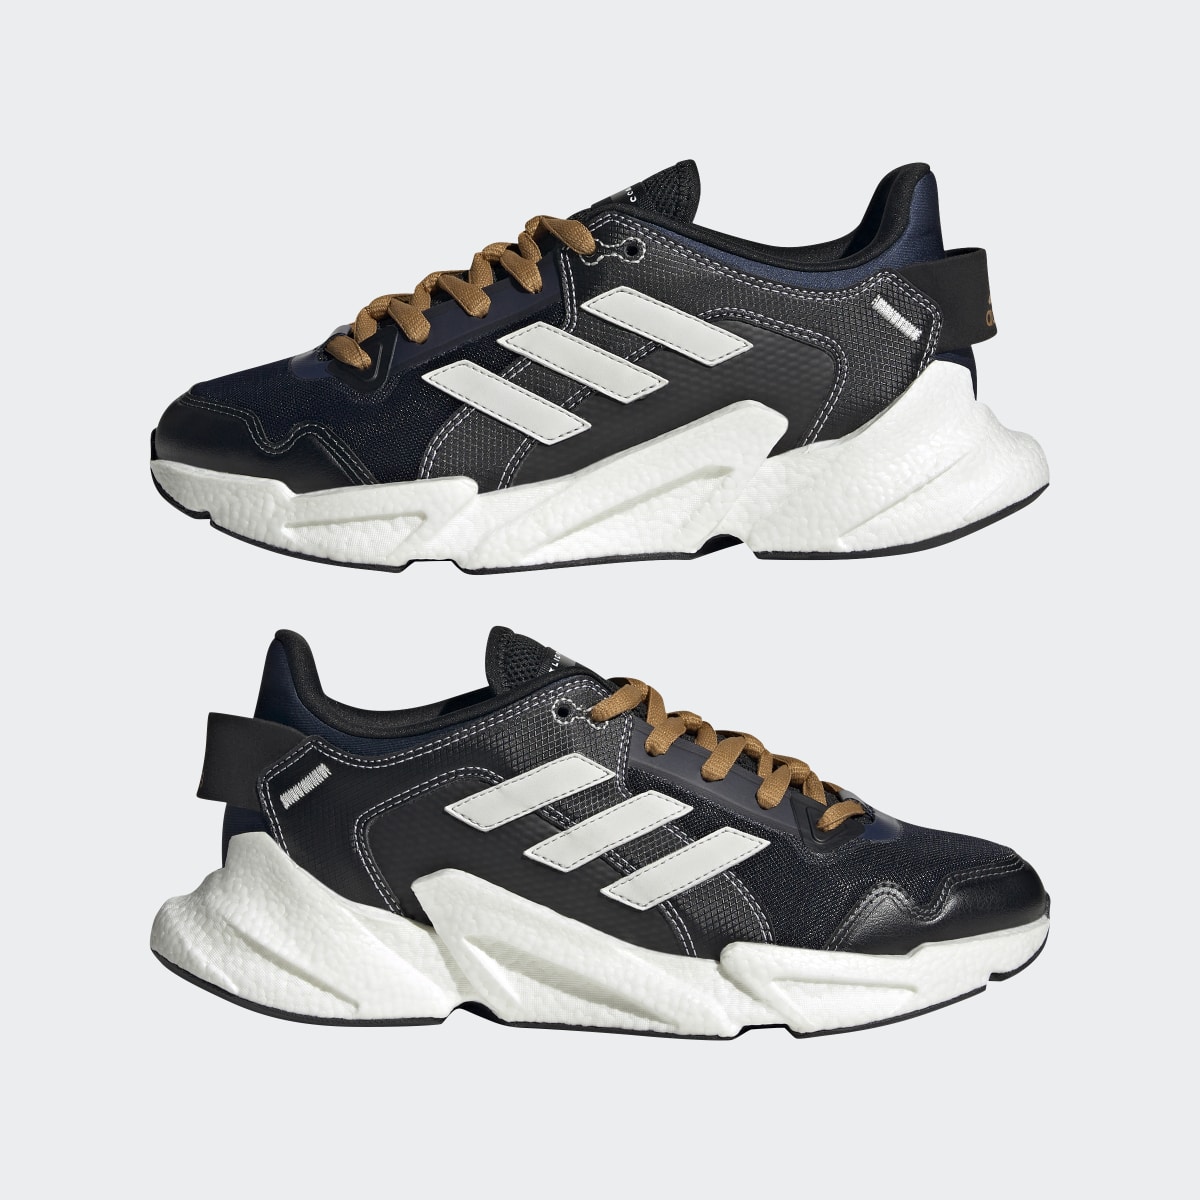 Adidas Karlie Kloss X9000 Shoes. 8